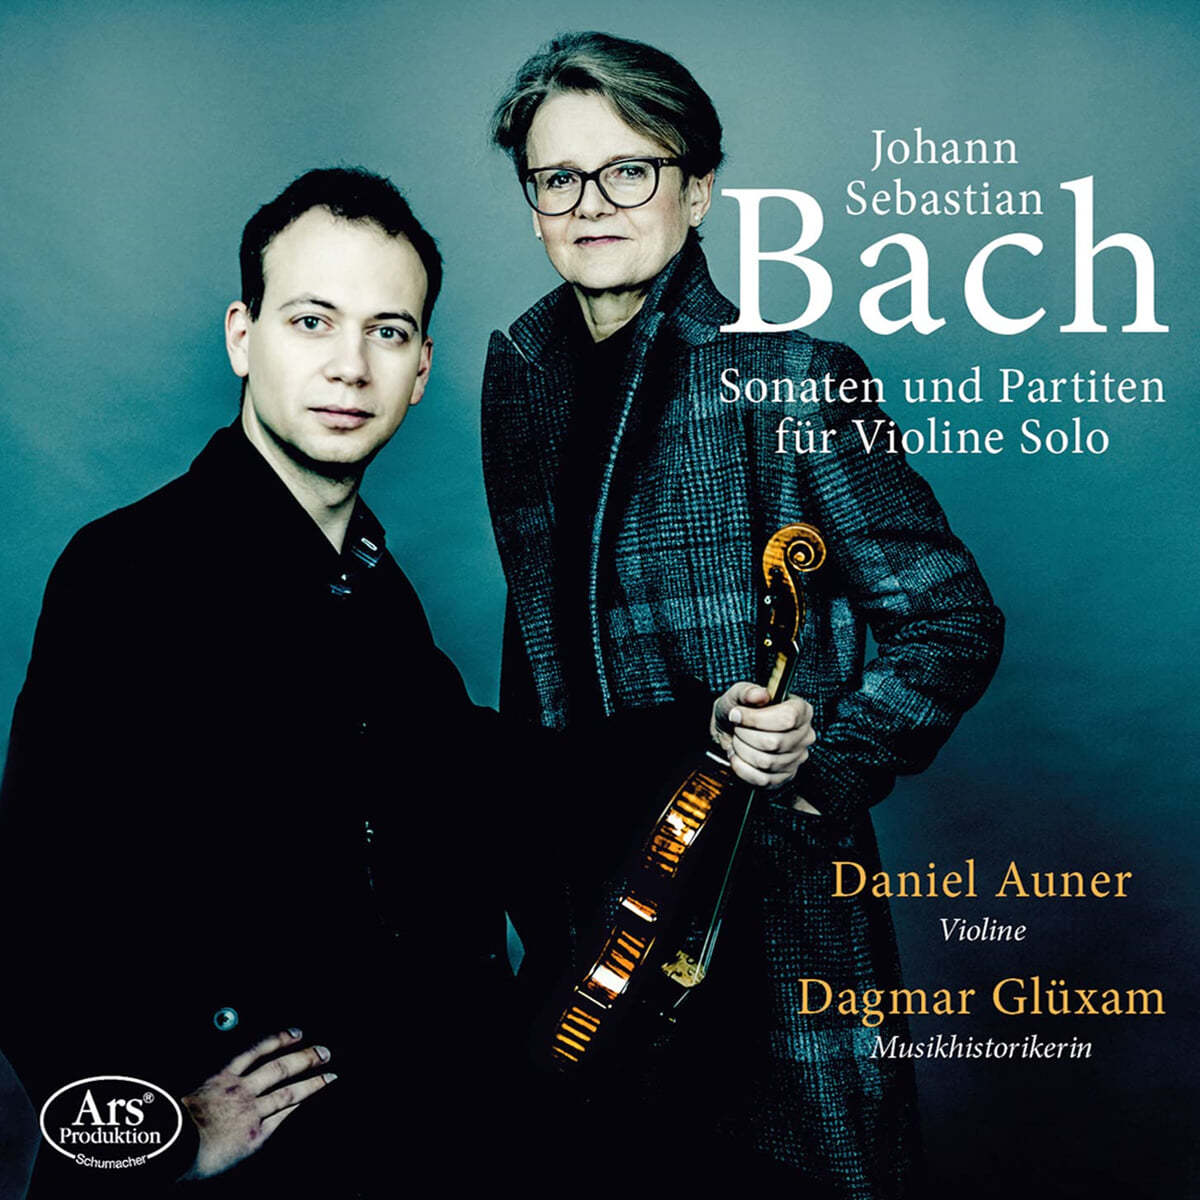 Daniel Auner 바흐: 무반주 바이올린 소나타 & 파르티타 전곡 (Bach: Sonatas & Partitas for Solo Violin "Sei Solo")